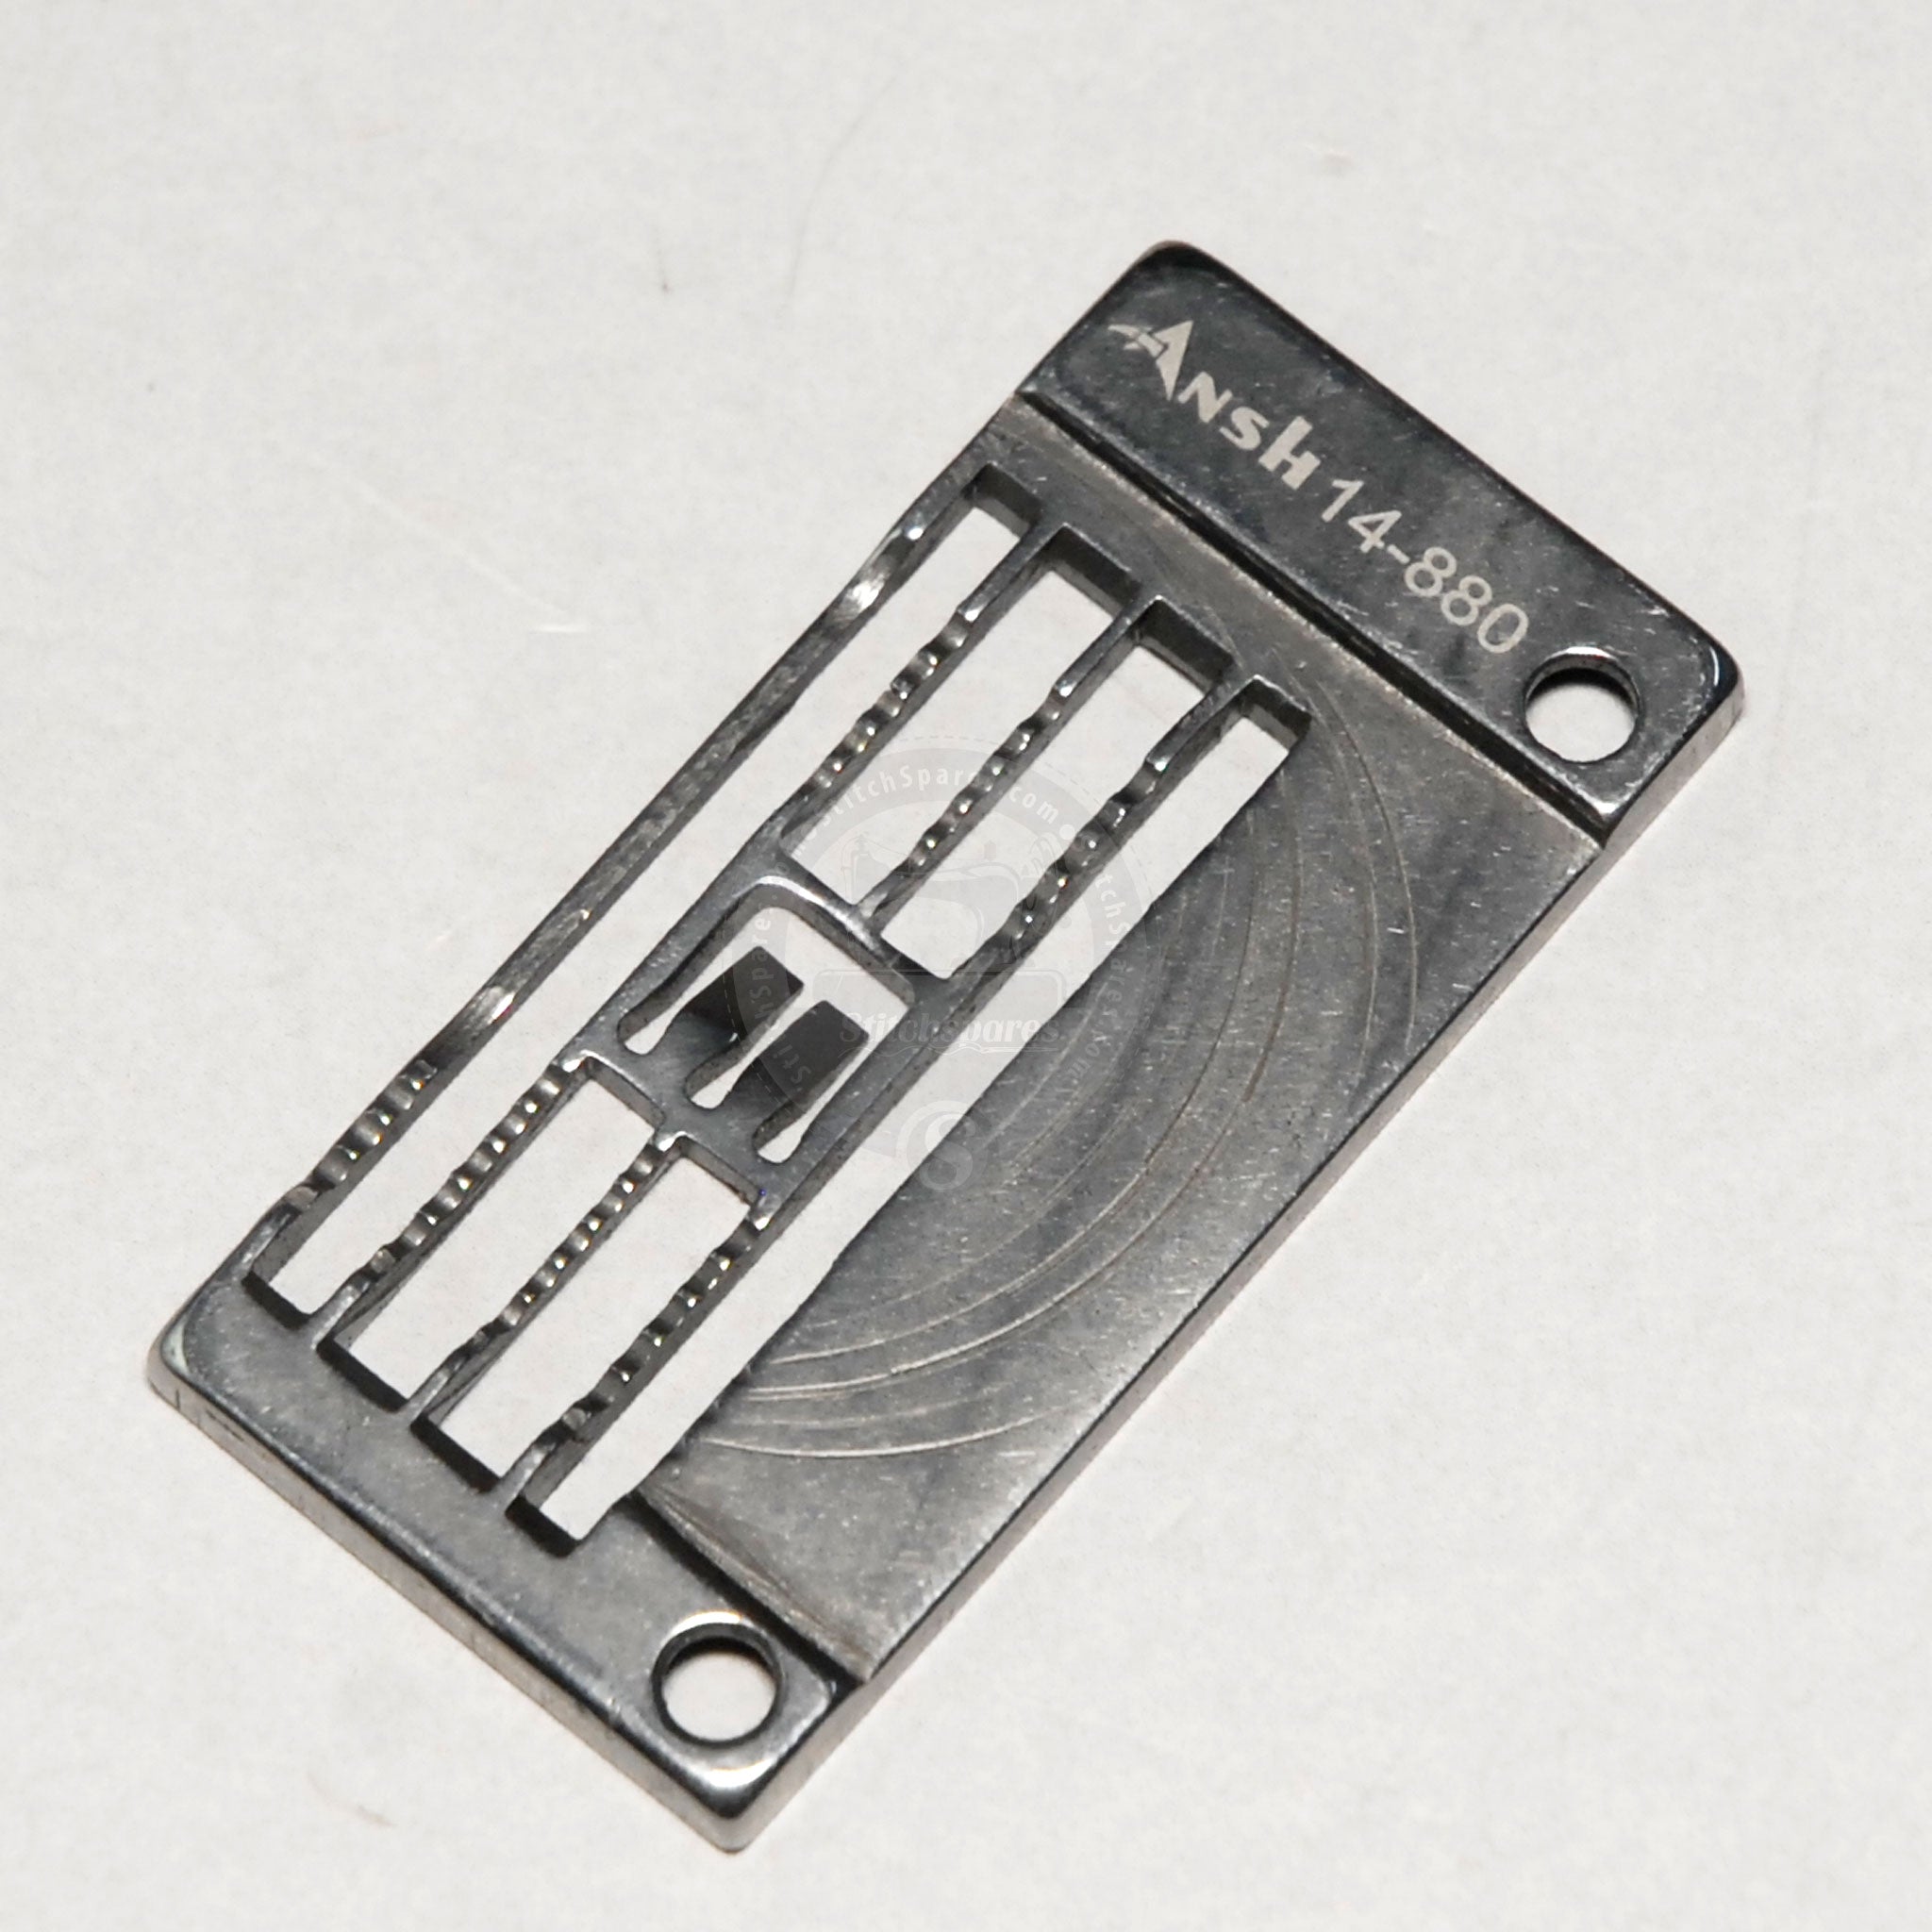 # 14-880 सुई प्लेट कंसाई WX-8800 फ्लैटबेड इंटरलॉक मशीन स्पेयर पार्ट